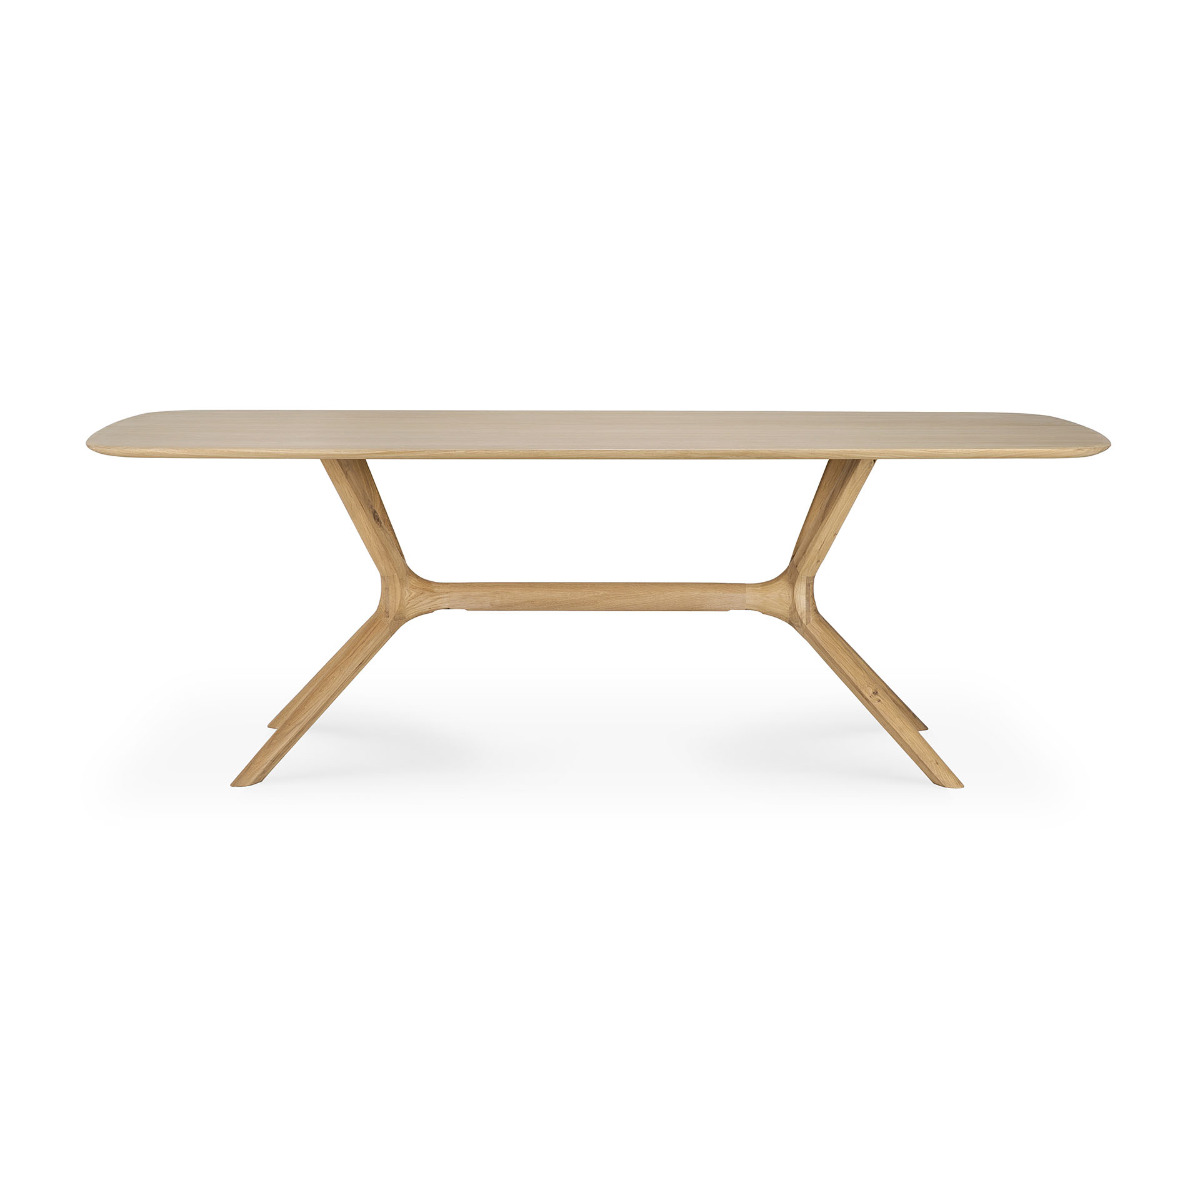 Oak X dining table 224cm